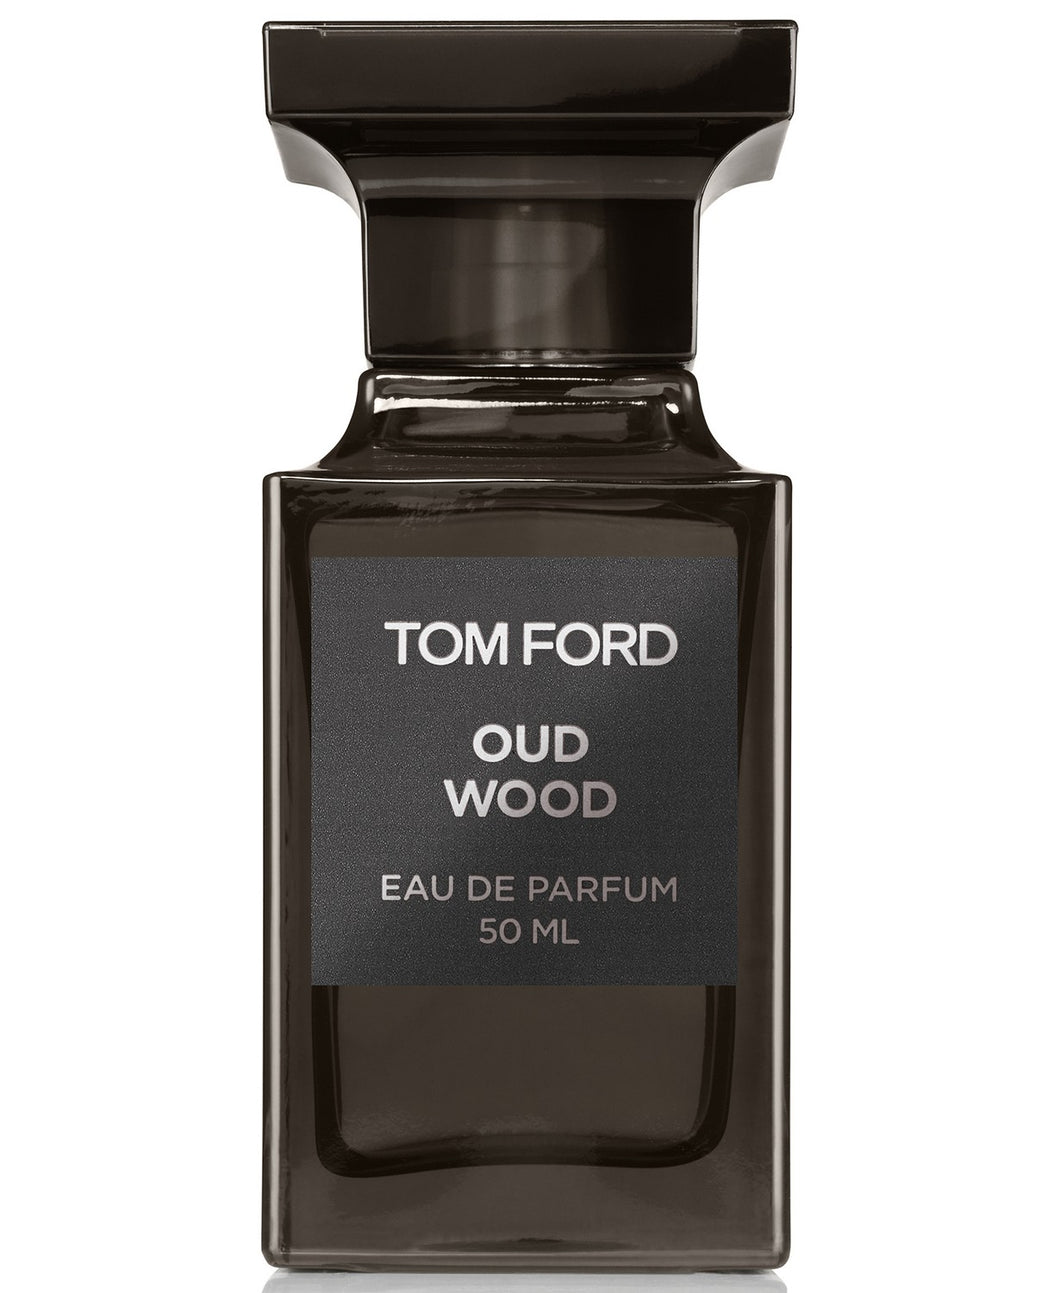 tom ford oud wood eau de parfum 50ml - alwaysspecialgifts.com